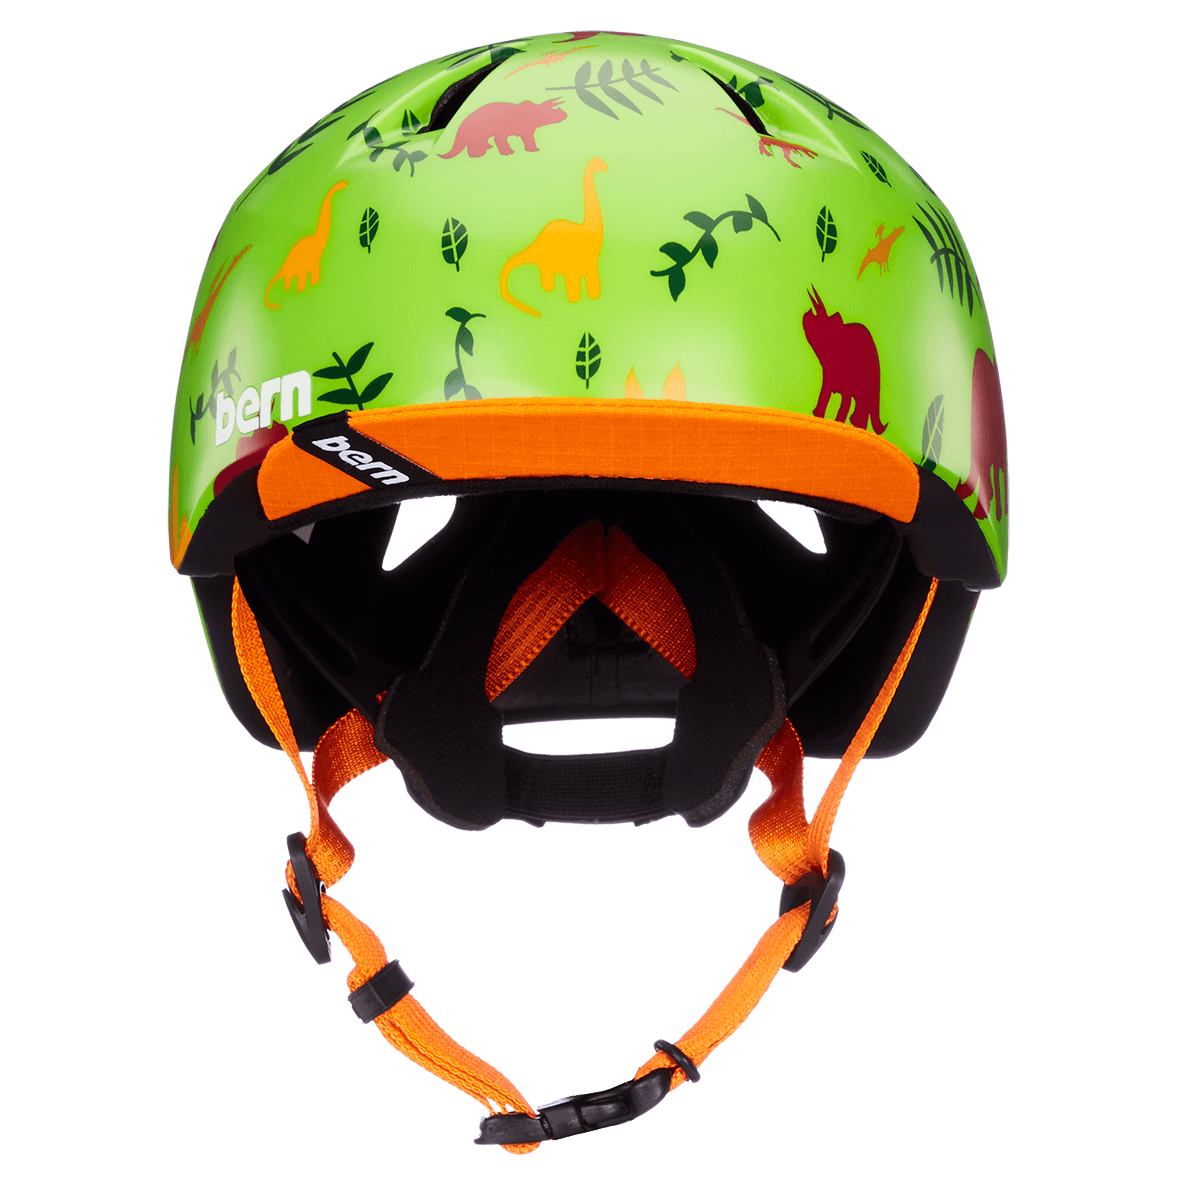 Tigre Youth Bike Helmet